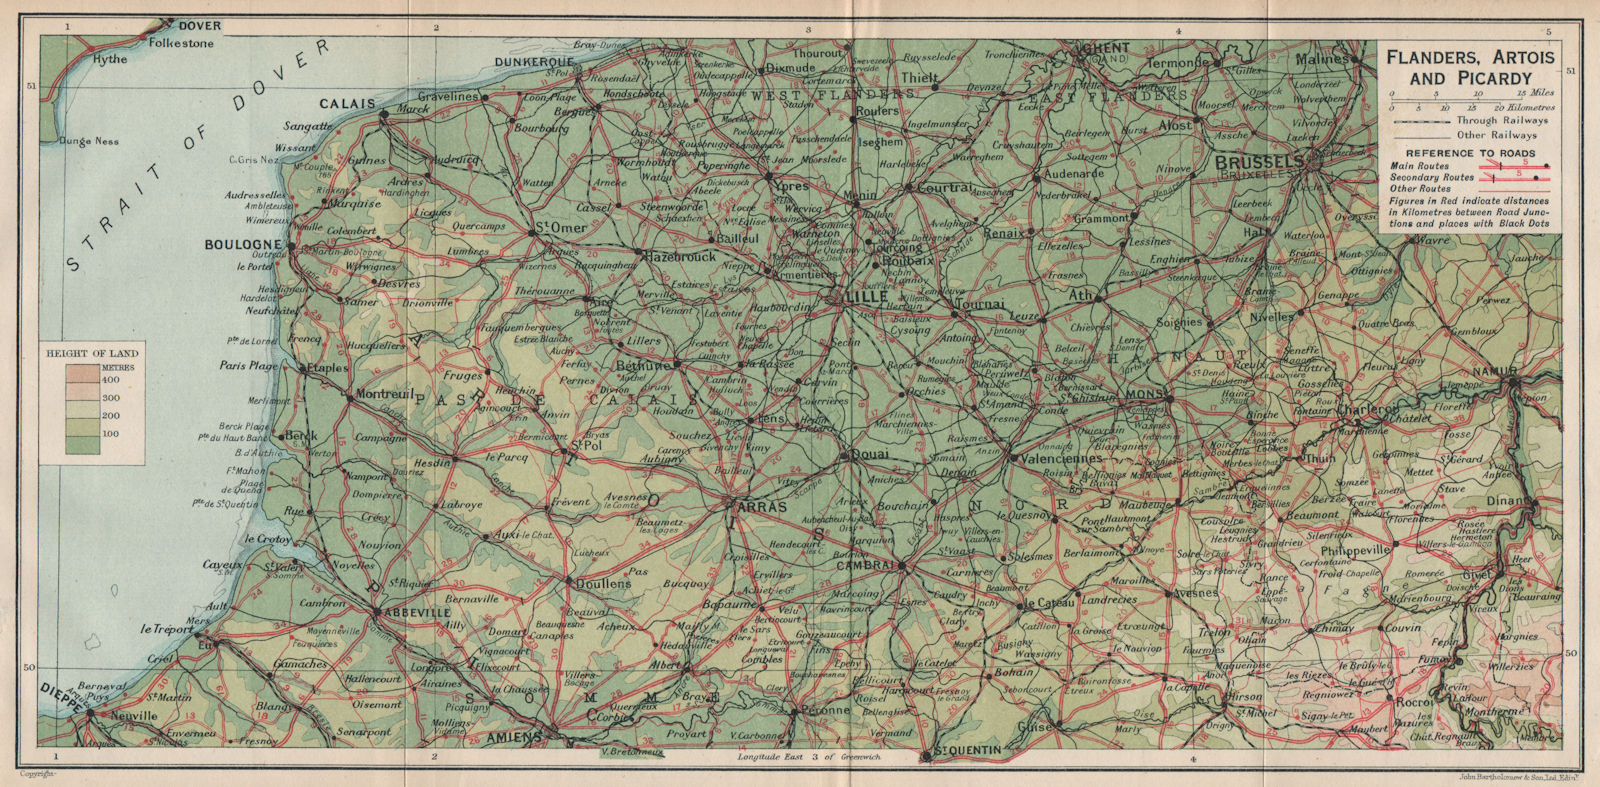 FLANDERS, ARTOIS & PICARDY. Railways Roads. Vintage map. France Belgium.  1922